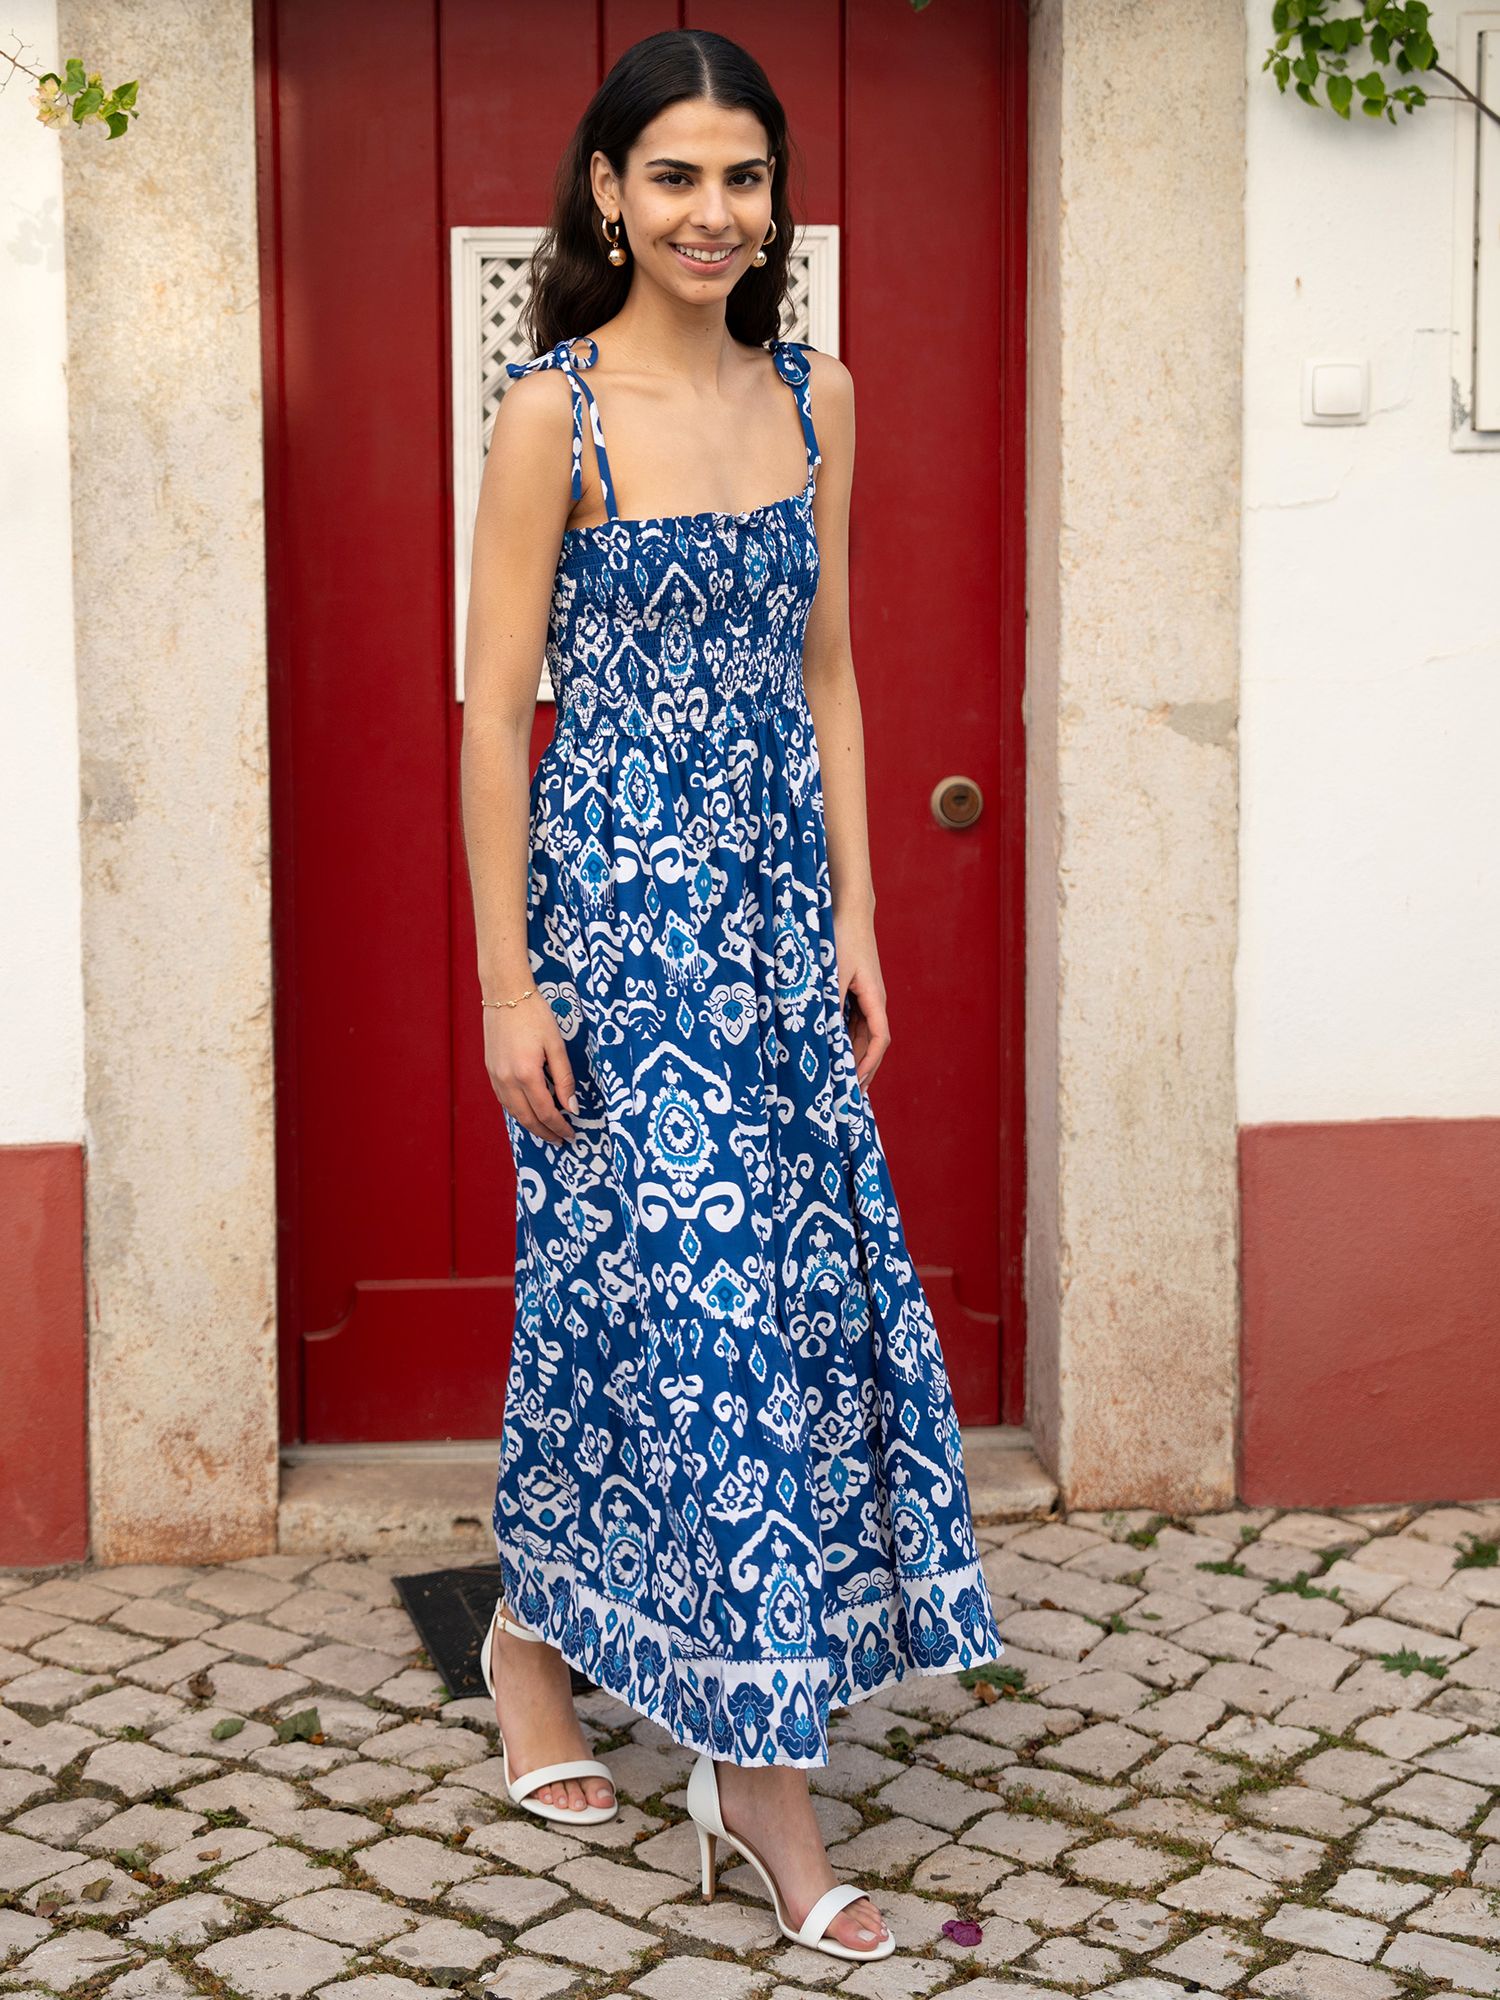 Yumi Ikat Print Maxi Sun Dress, Blue/White, 8